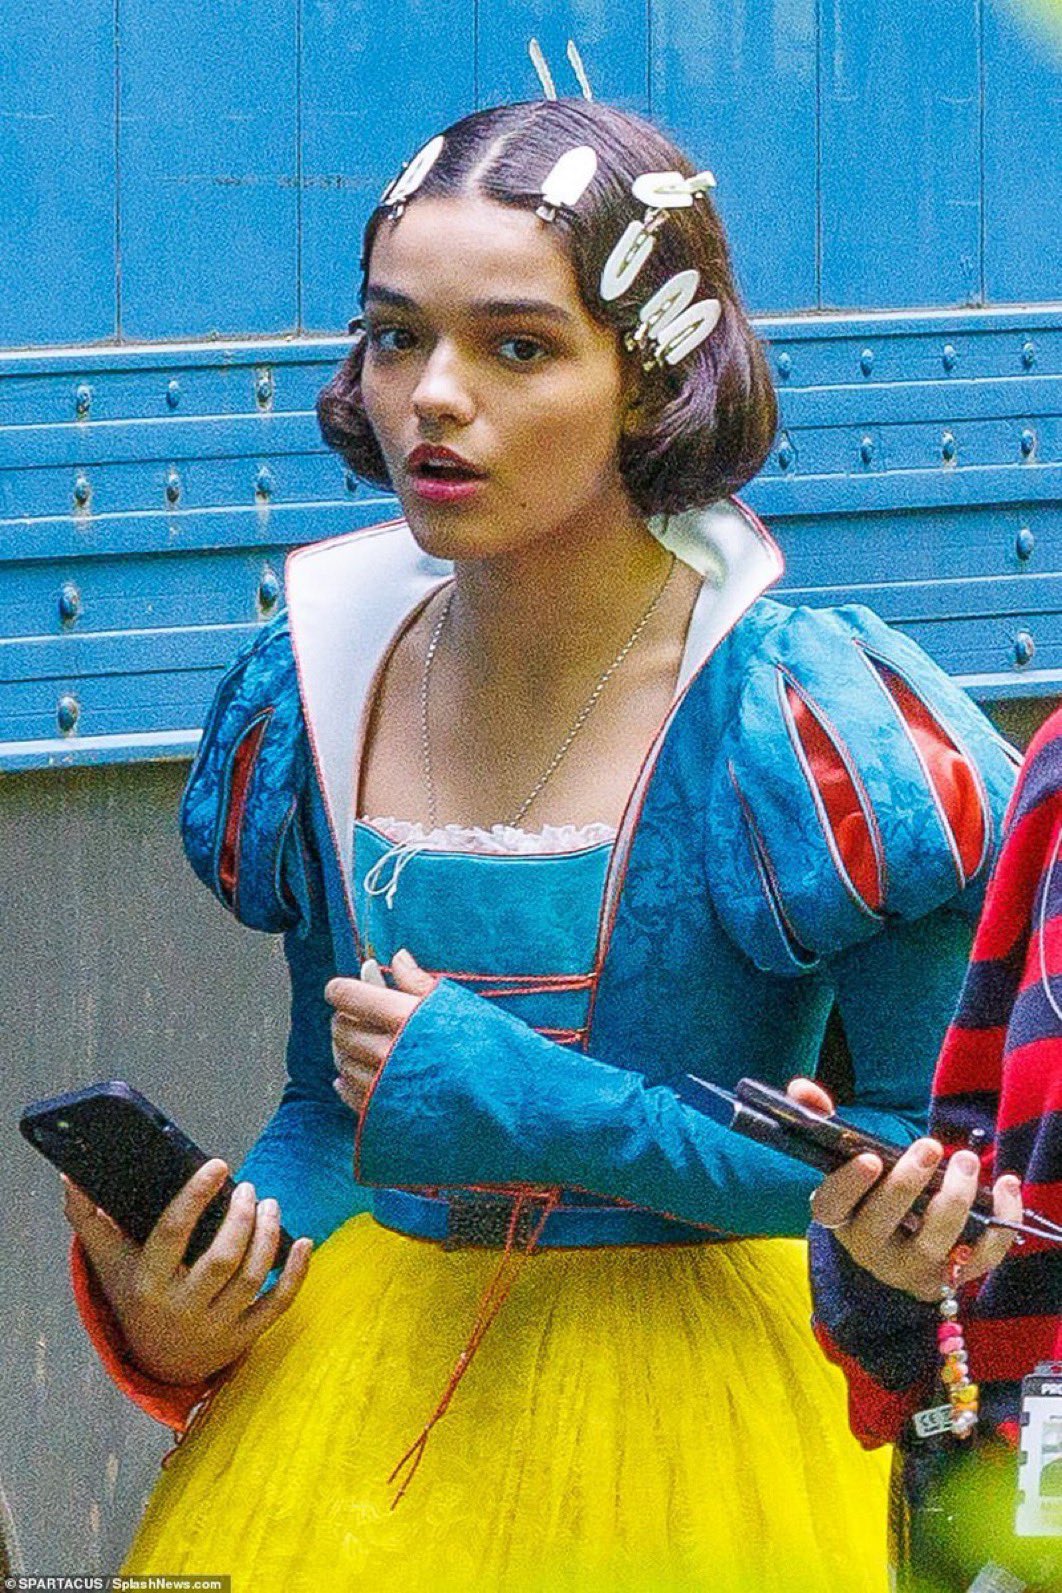 Rachel-Zegler-Snow-White-2 Snow White: The First Photos of Rachel Zegler in Princess Costume Leak